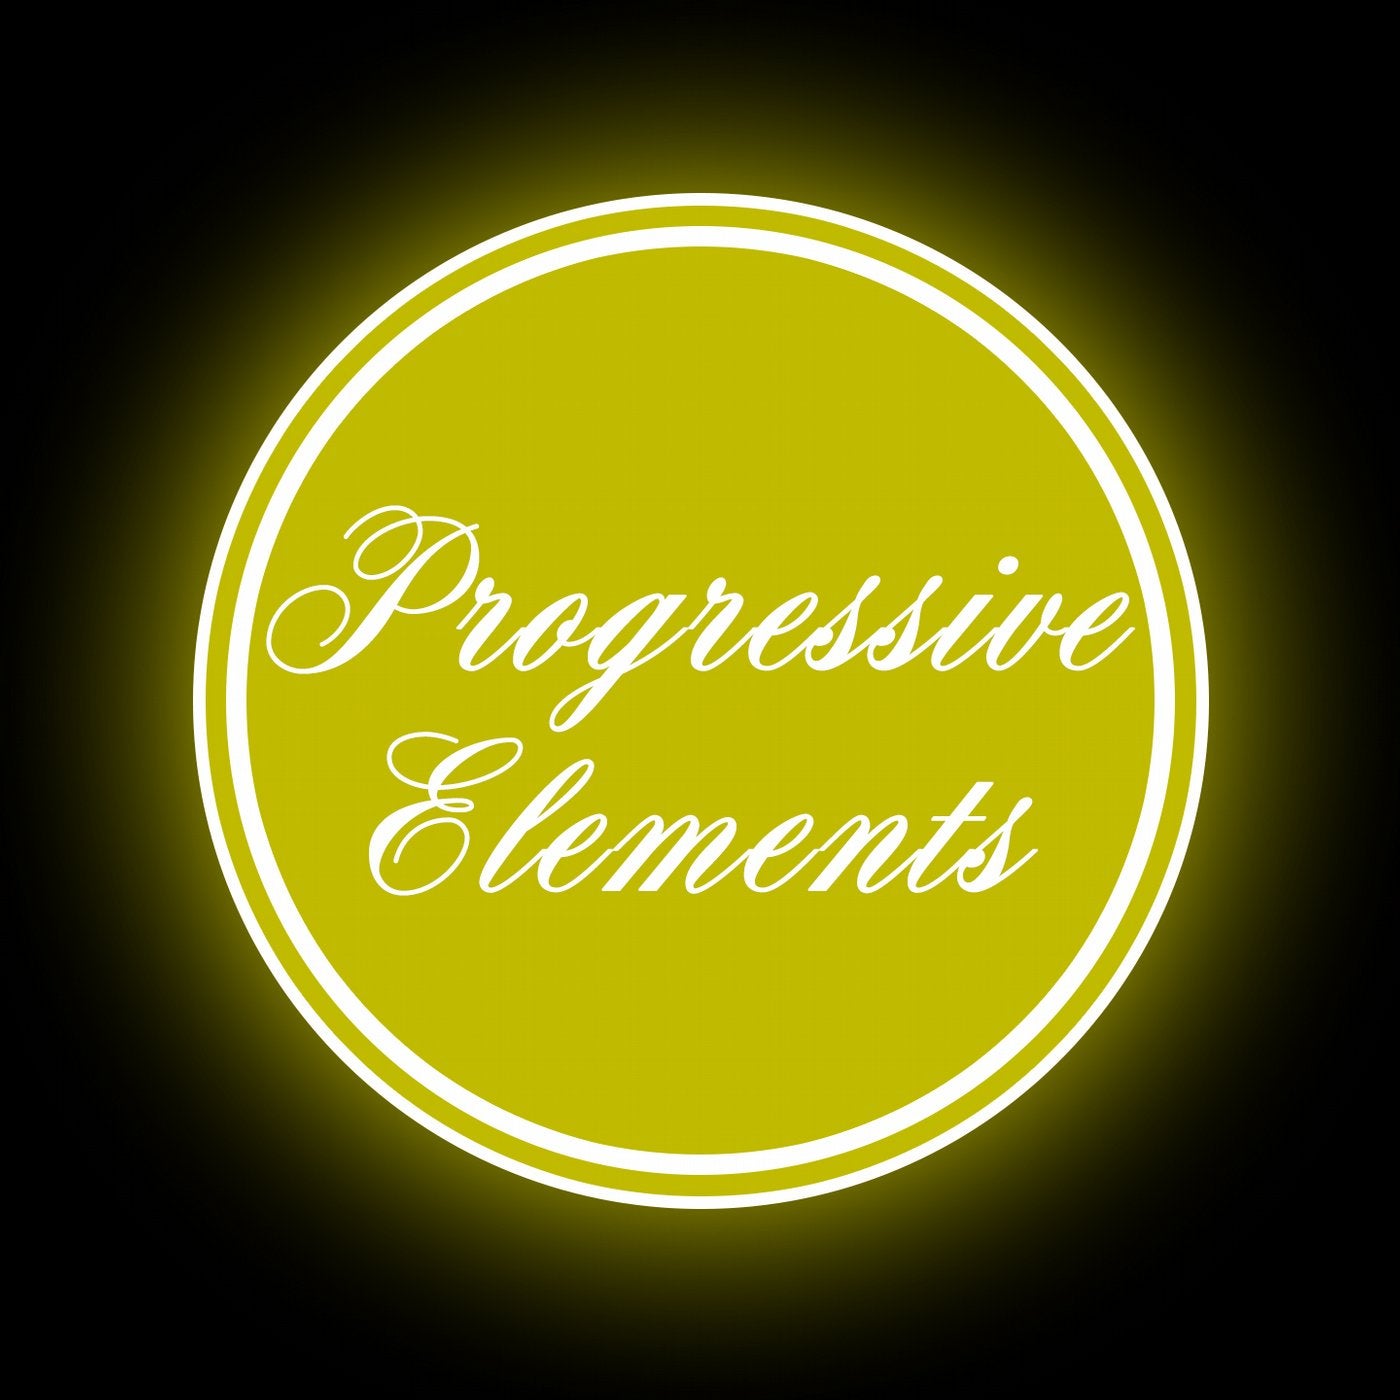 Progressive Elements